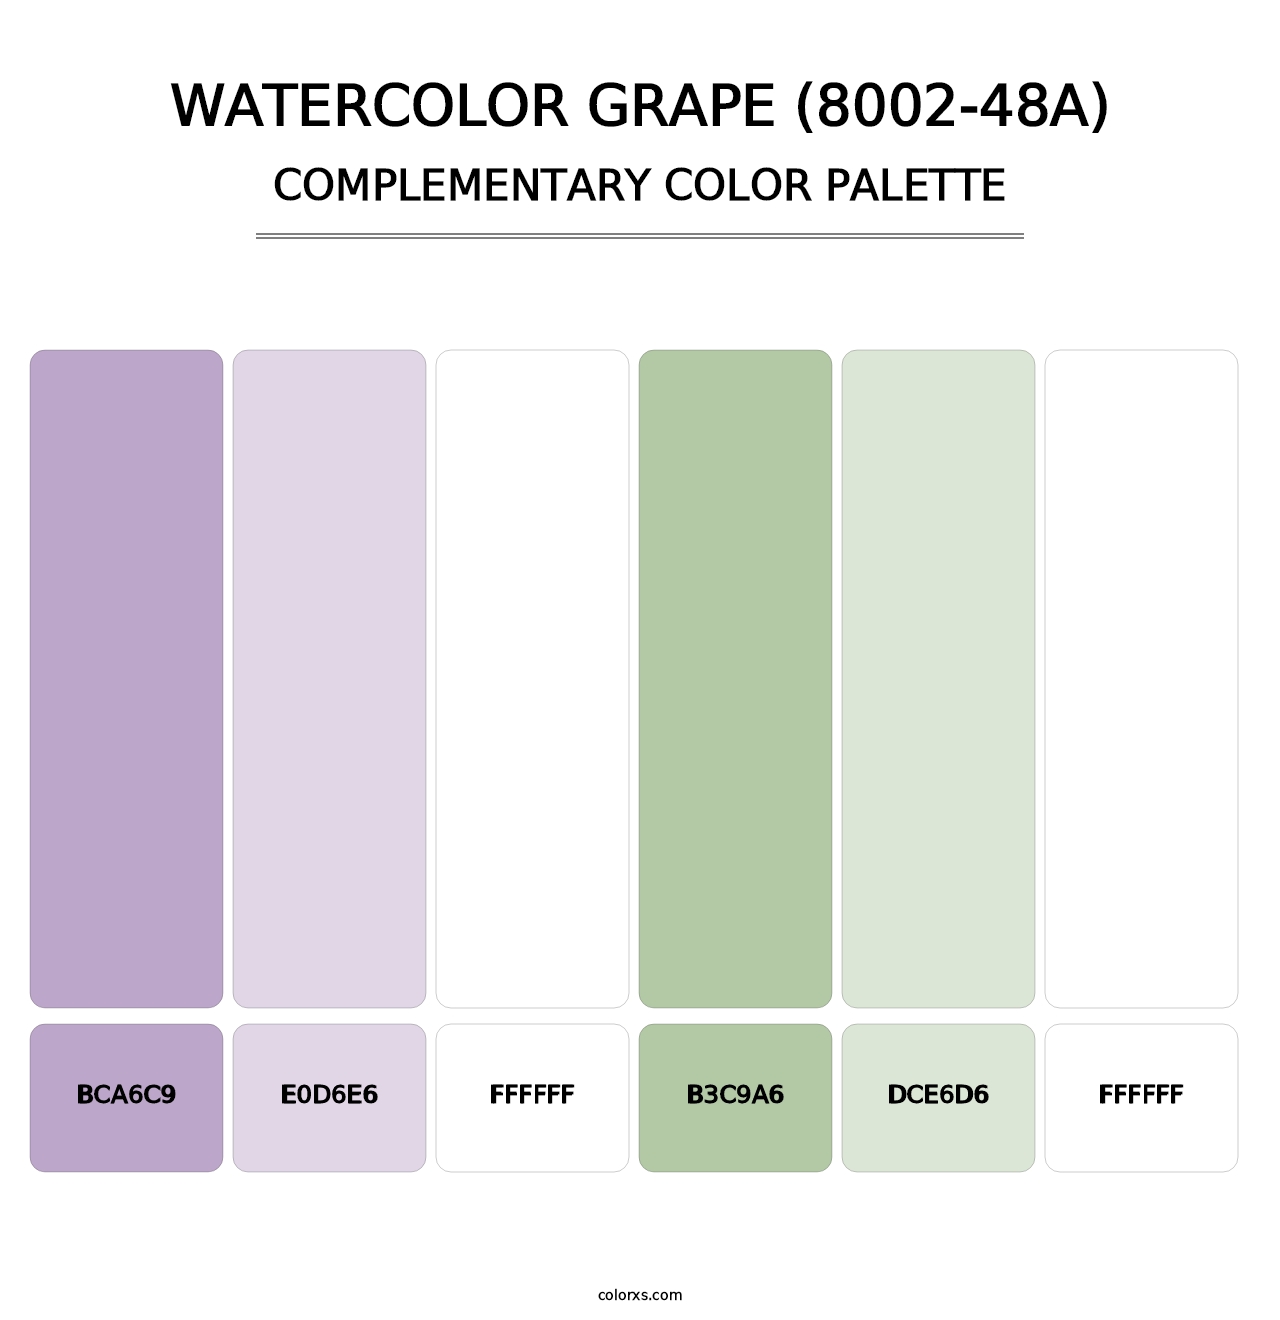 Watercolor Grape (8002-48A) - Complementary Color Palette